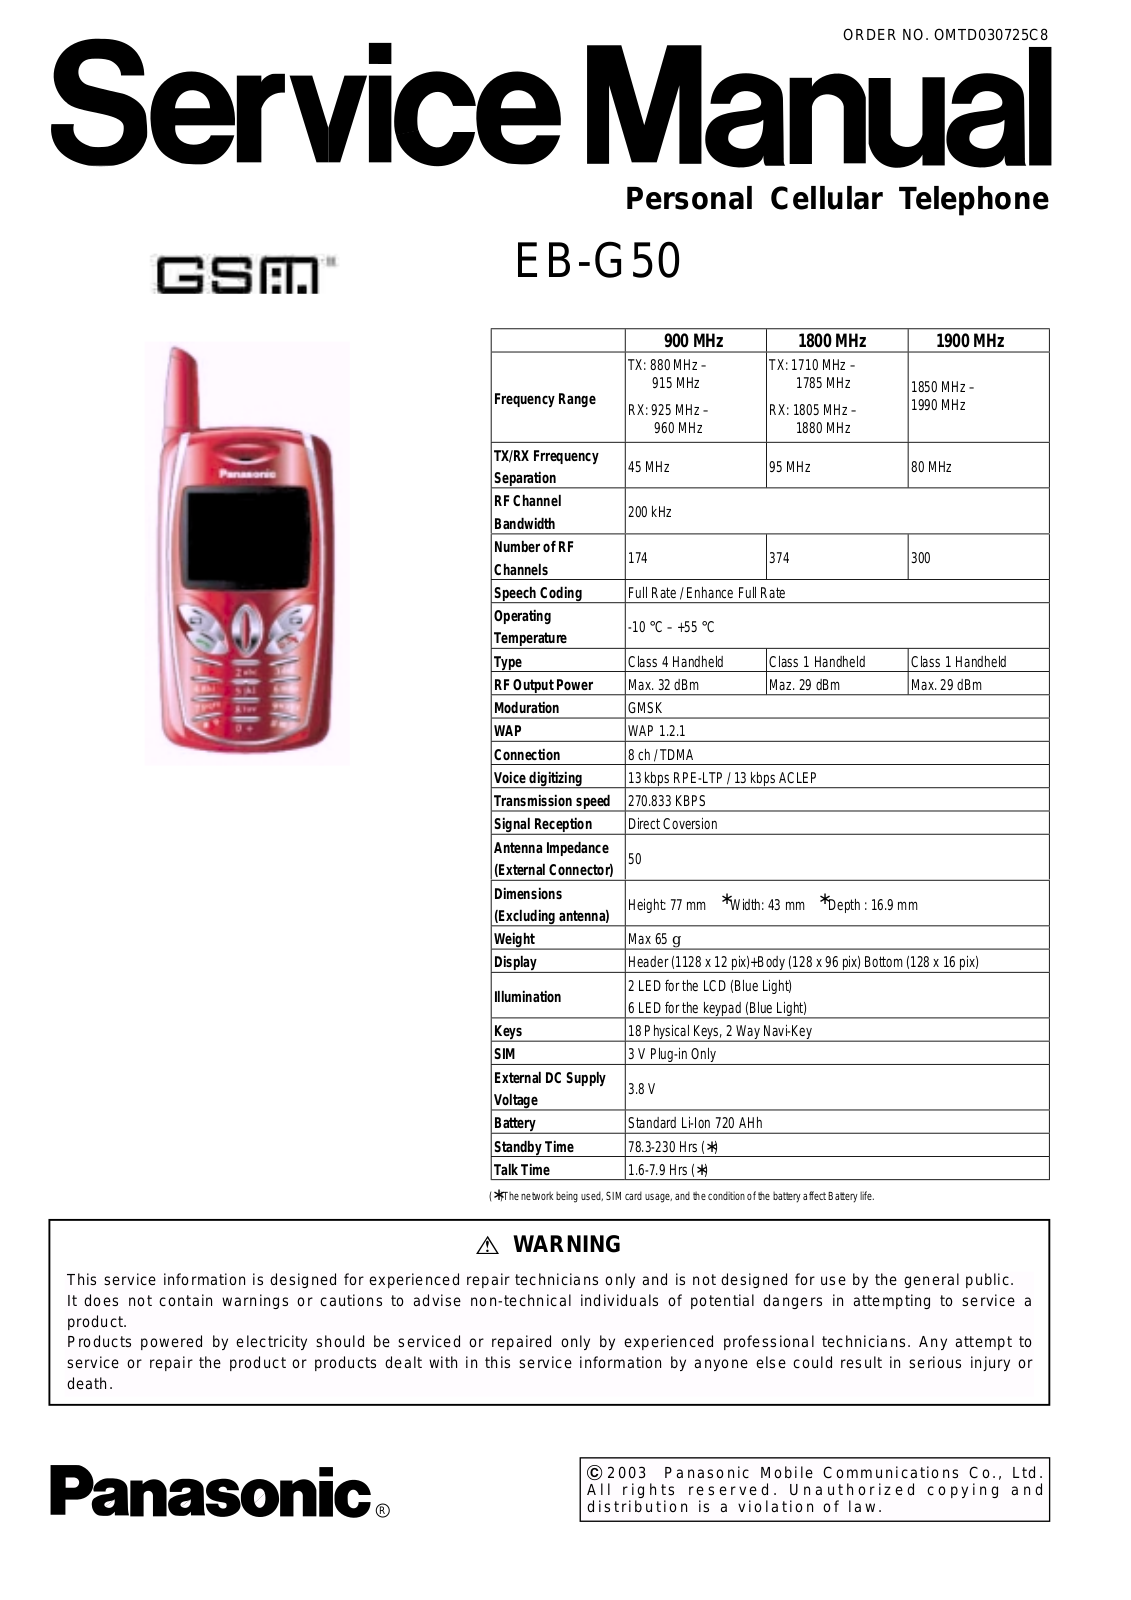 Panasonic G50 Service Manual